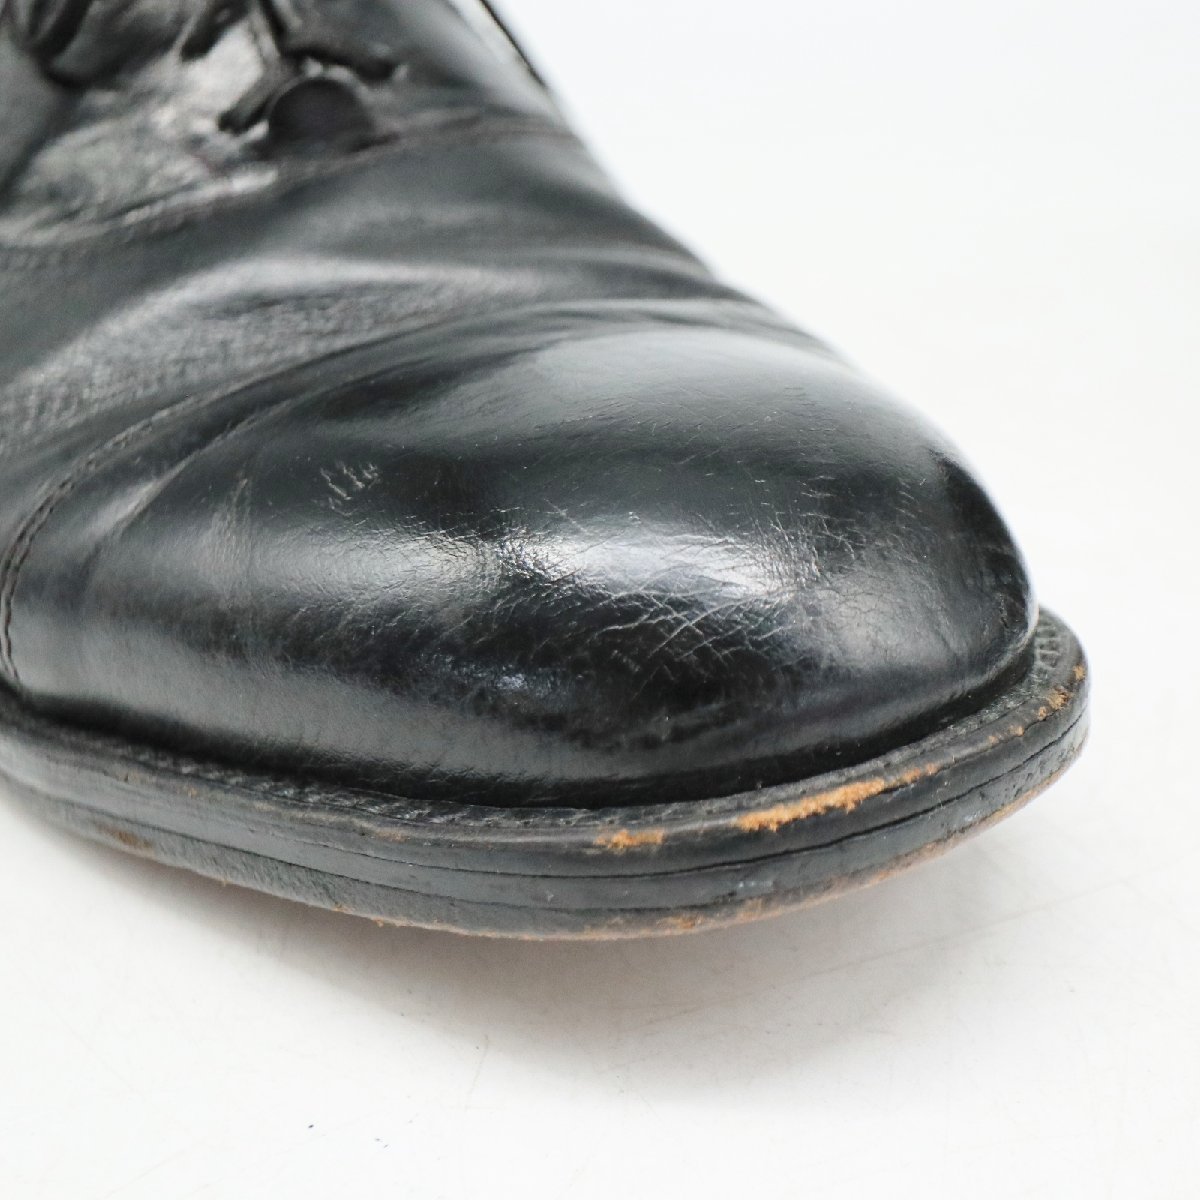 SALE/// Freeman 内羽根式 ストレートチップ 本革 レザー 革靴 レザーシューズ ブラック ( メンズ 8 EEE ≒ 26cm ) KA0173_画像6